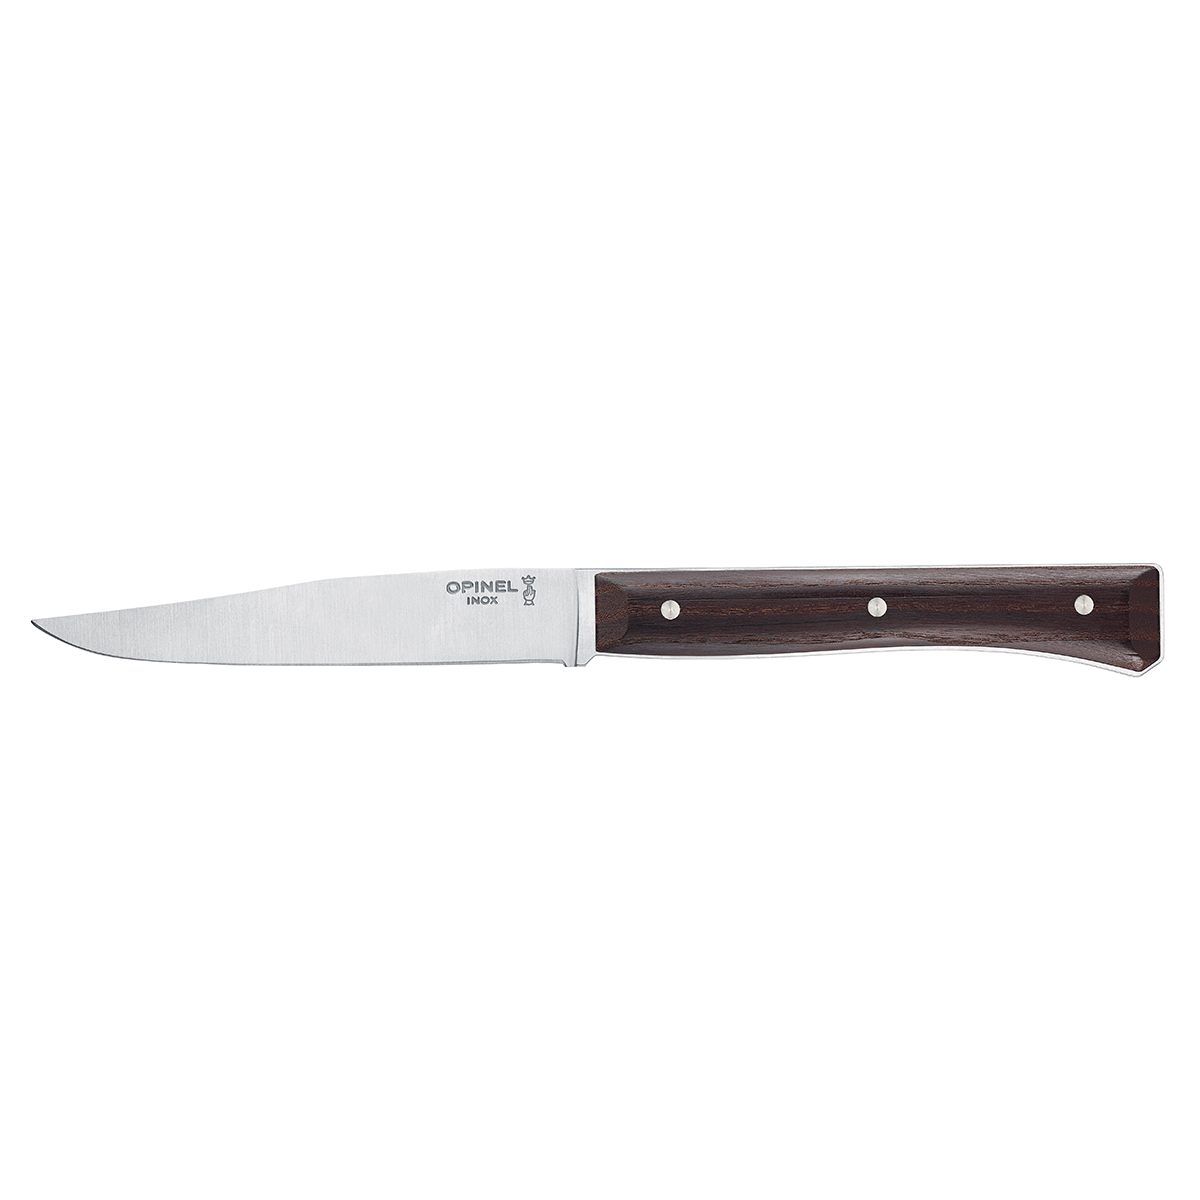 Opinel 4-pc steak knife set, ash wood  Advantageously shopping at